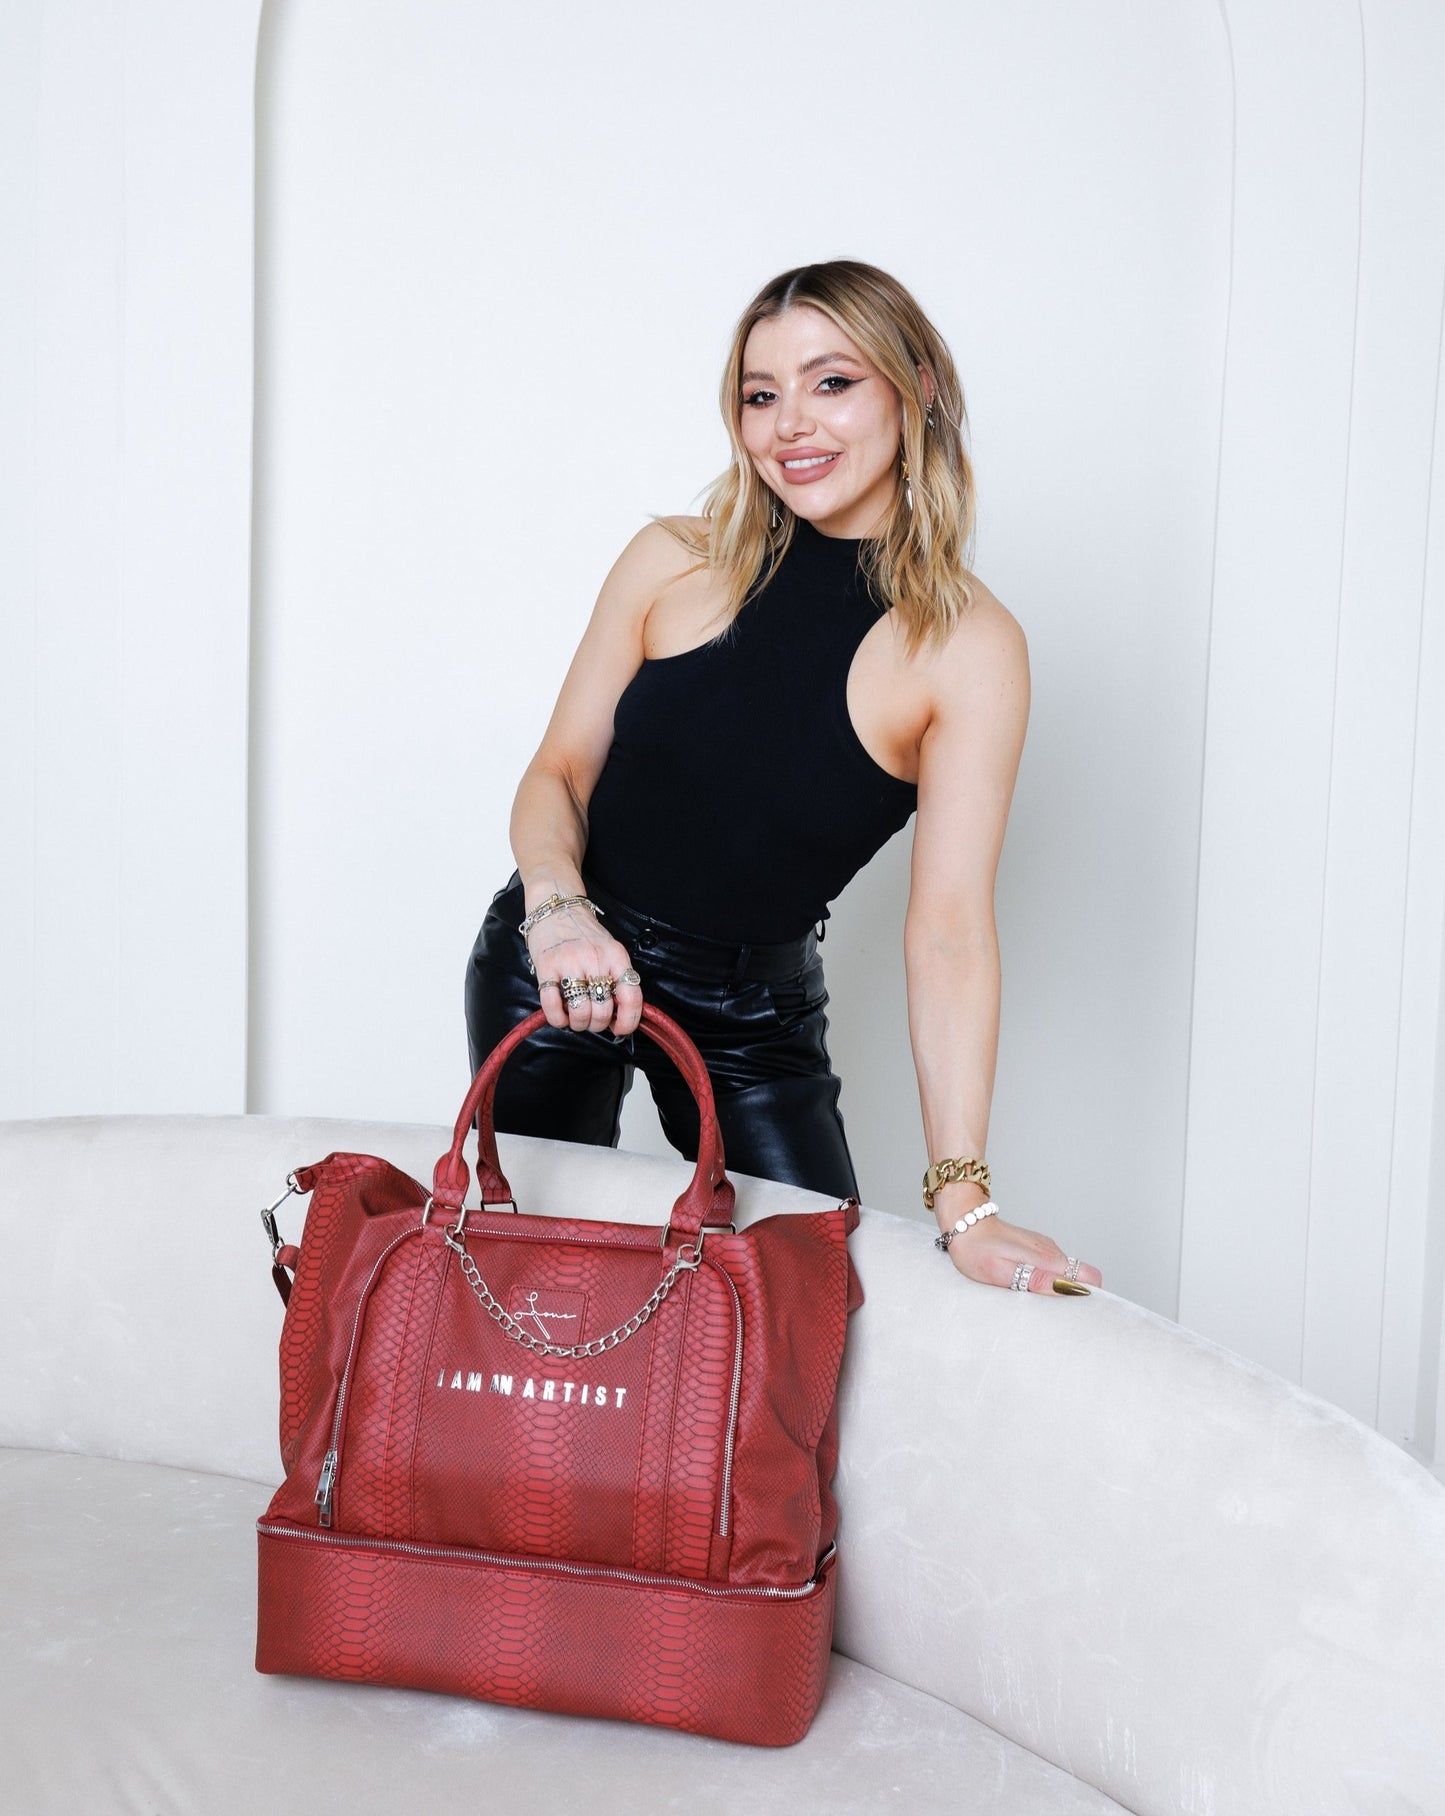 Artisan Series: Artemisa “I Am An Artist” Red Vegan Leather Luxury Tote Bag